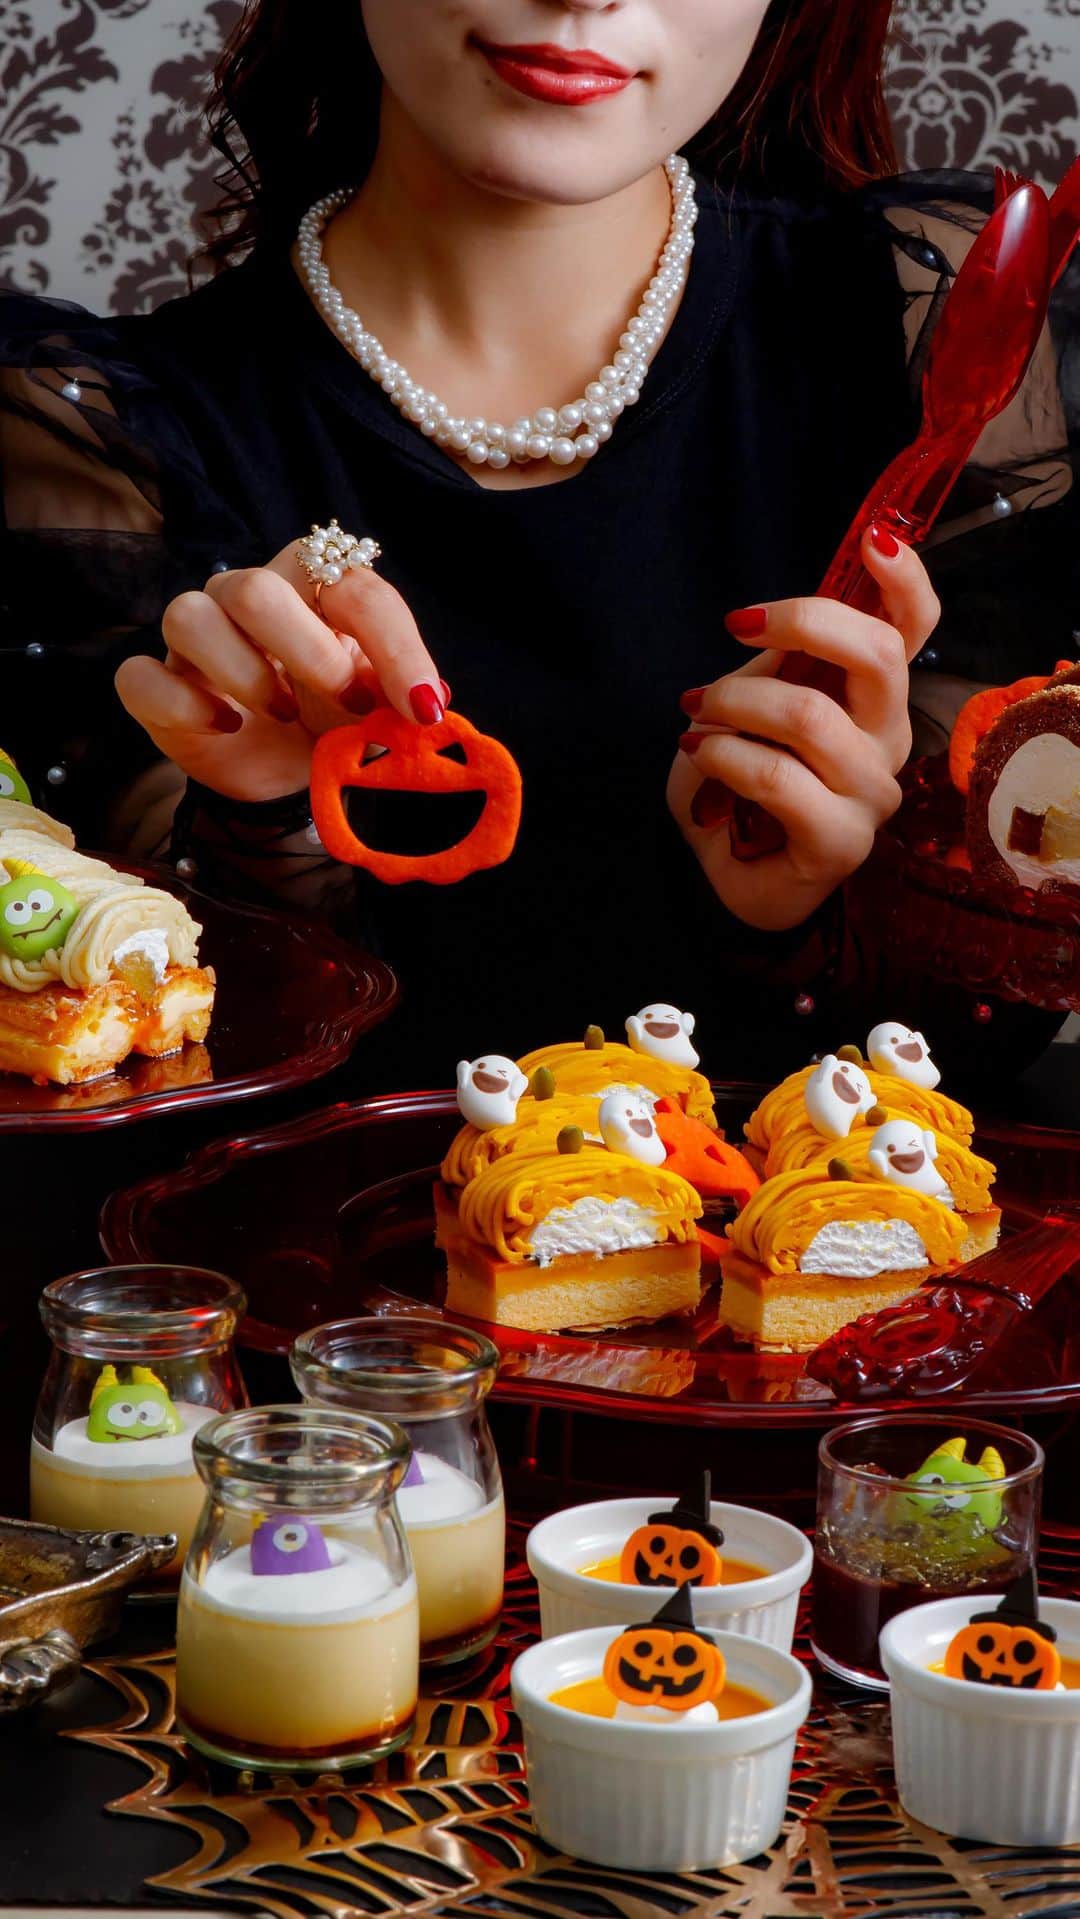 newotani_osakaのインスタグラム：「SATSUKI LOUNGE offers autumn sweets buffet, “Super Sweets Buffet 2023”. The Halloween Party will be started from 1st October. “Scary and cute” sweets will be made by pastry chefs. Don’t miss them!  SATSUKI LOUNGEでは、秋のスイーツビュッフェ『Super Sweets Buffet 2023〜いもくりなんきん〜』が開催中。10/1(日)からは、“ハロウィーン　パーティー”をテーマにしたパティシエの遊び心溢れる”怖かわいい”スイーツが登場します。  ーーーーーーーーーーーーーーーーーーーーー #ホテルニューオータニ大阪 #スイーツ #スーパースイーツビュッフェ #スイーツビュッフェ #スイーツ好き #モンブラン #ケーキ #ショートケーキ #ケーキ部 #スイーツ女子 #スイーツ男子 #ホテルスイーツ #ケーキ屋巡り #ぶどう #大阪スイーツ #大阪市中央区 #大阪城公園 #大阪城 #ハロウィーン #ハロウィン   #hotelnewotaniosaka  #osakacastlepark #osakacastle #osaka #osakatrip #japan  #🌰🌰 #🍰🍰🍰 #🎃🎃 #🎃👻  ーーーーーーーーーーーーーーーーーーーーー」